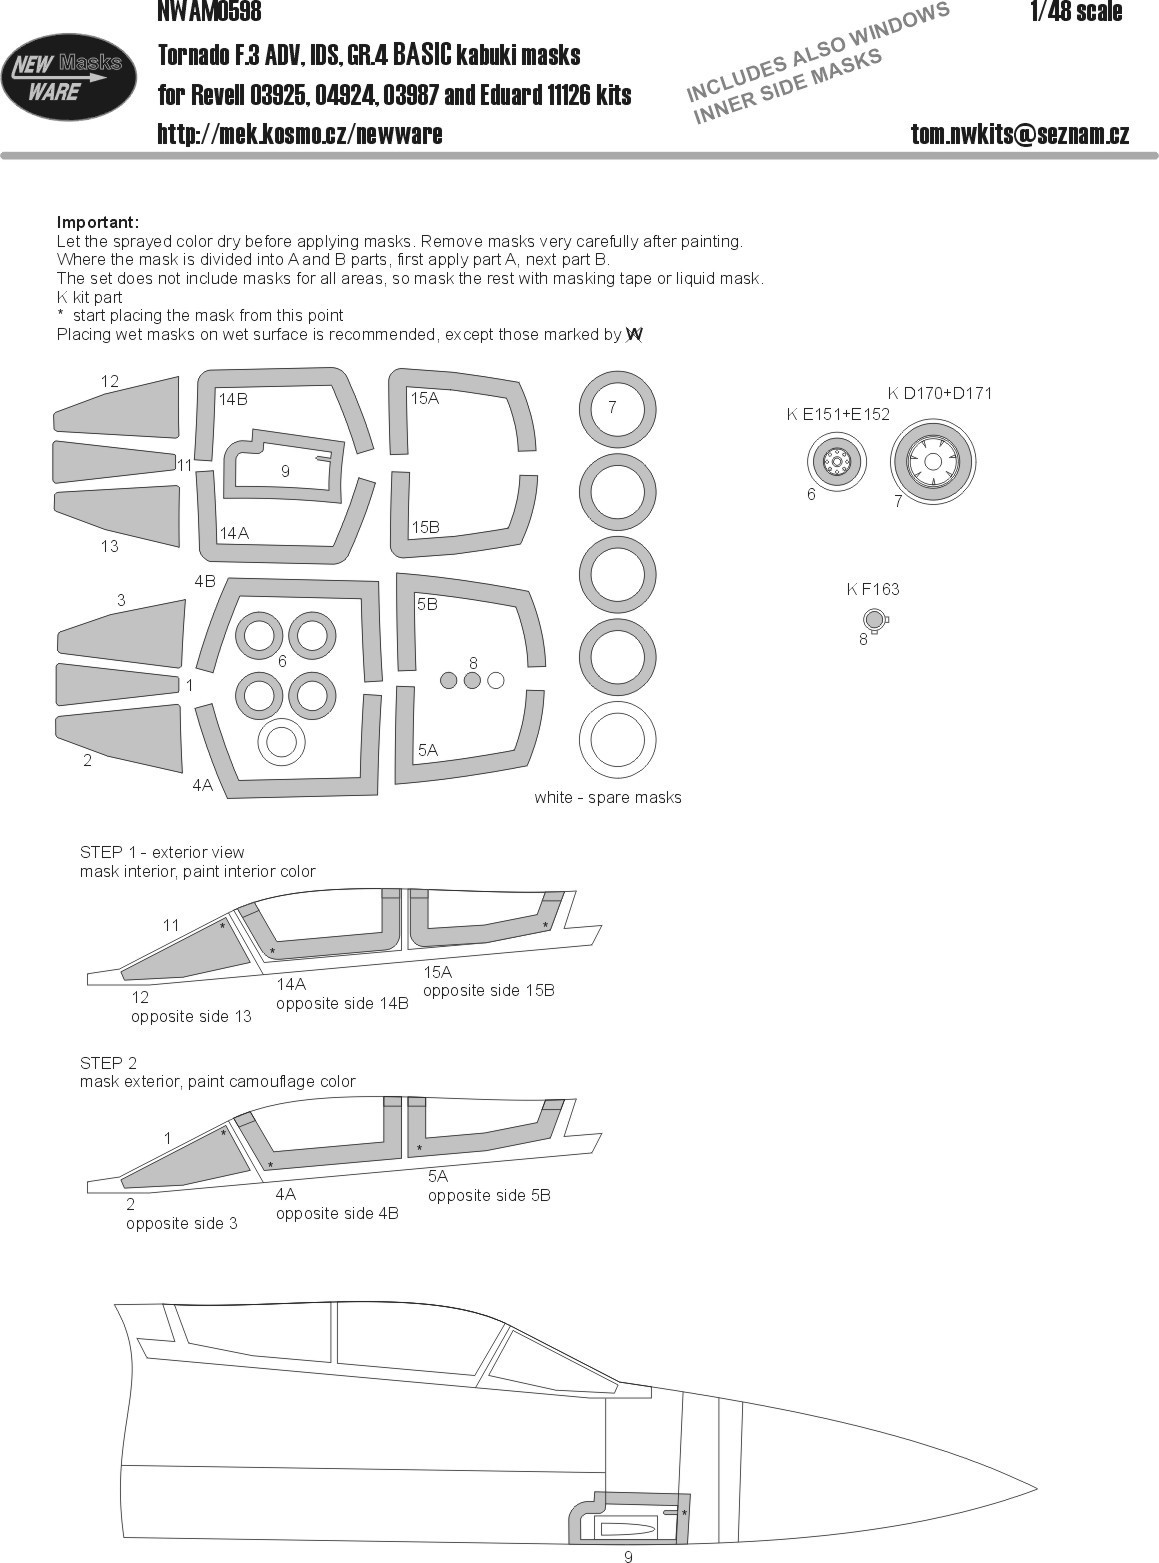  New Ware Les masques pour kabuki Panavia Tornado F.3 ADV, IDS et GR.4